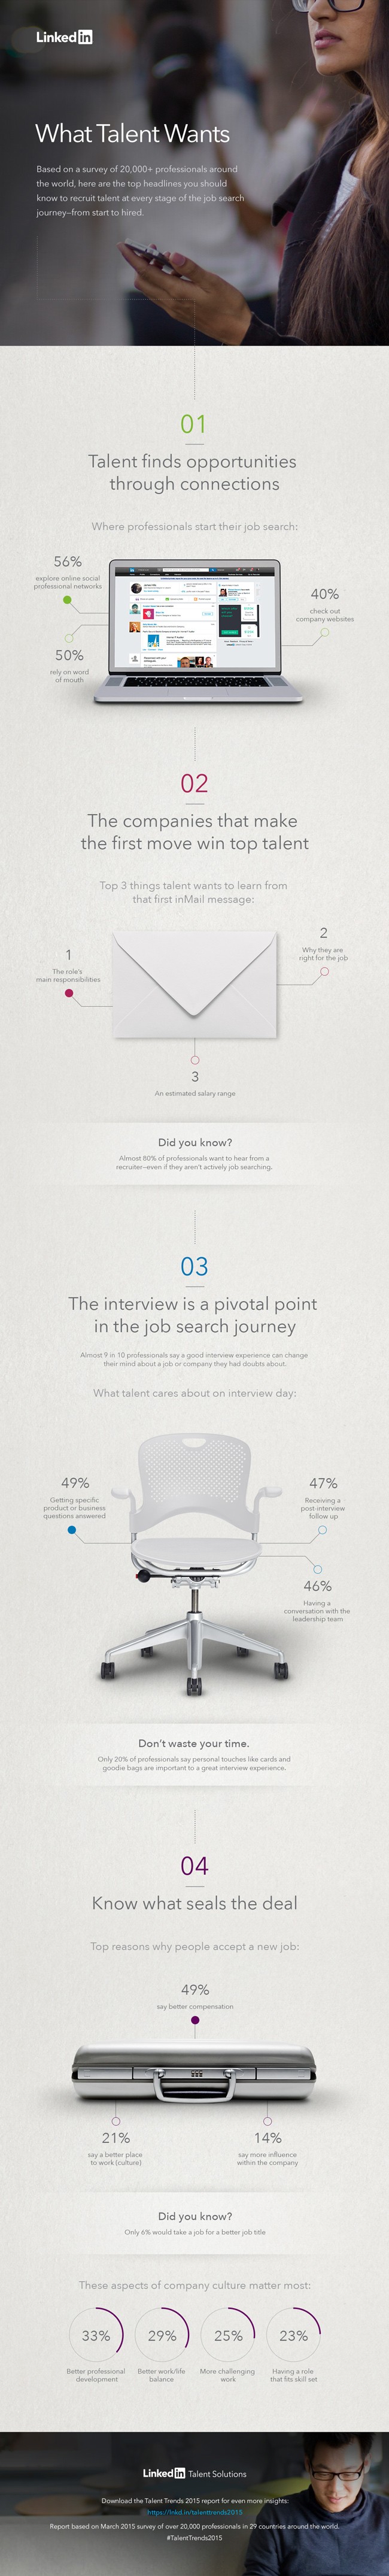 Global_Talent_Trends_Infographic_FinalHandoff_2